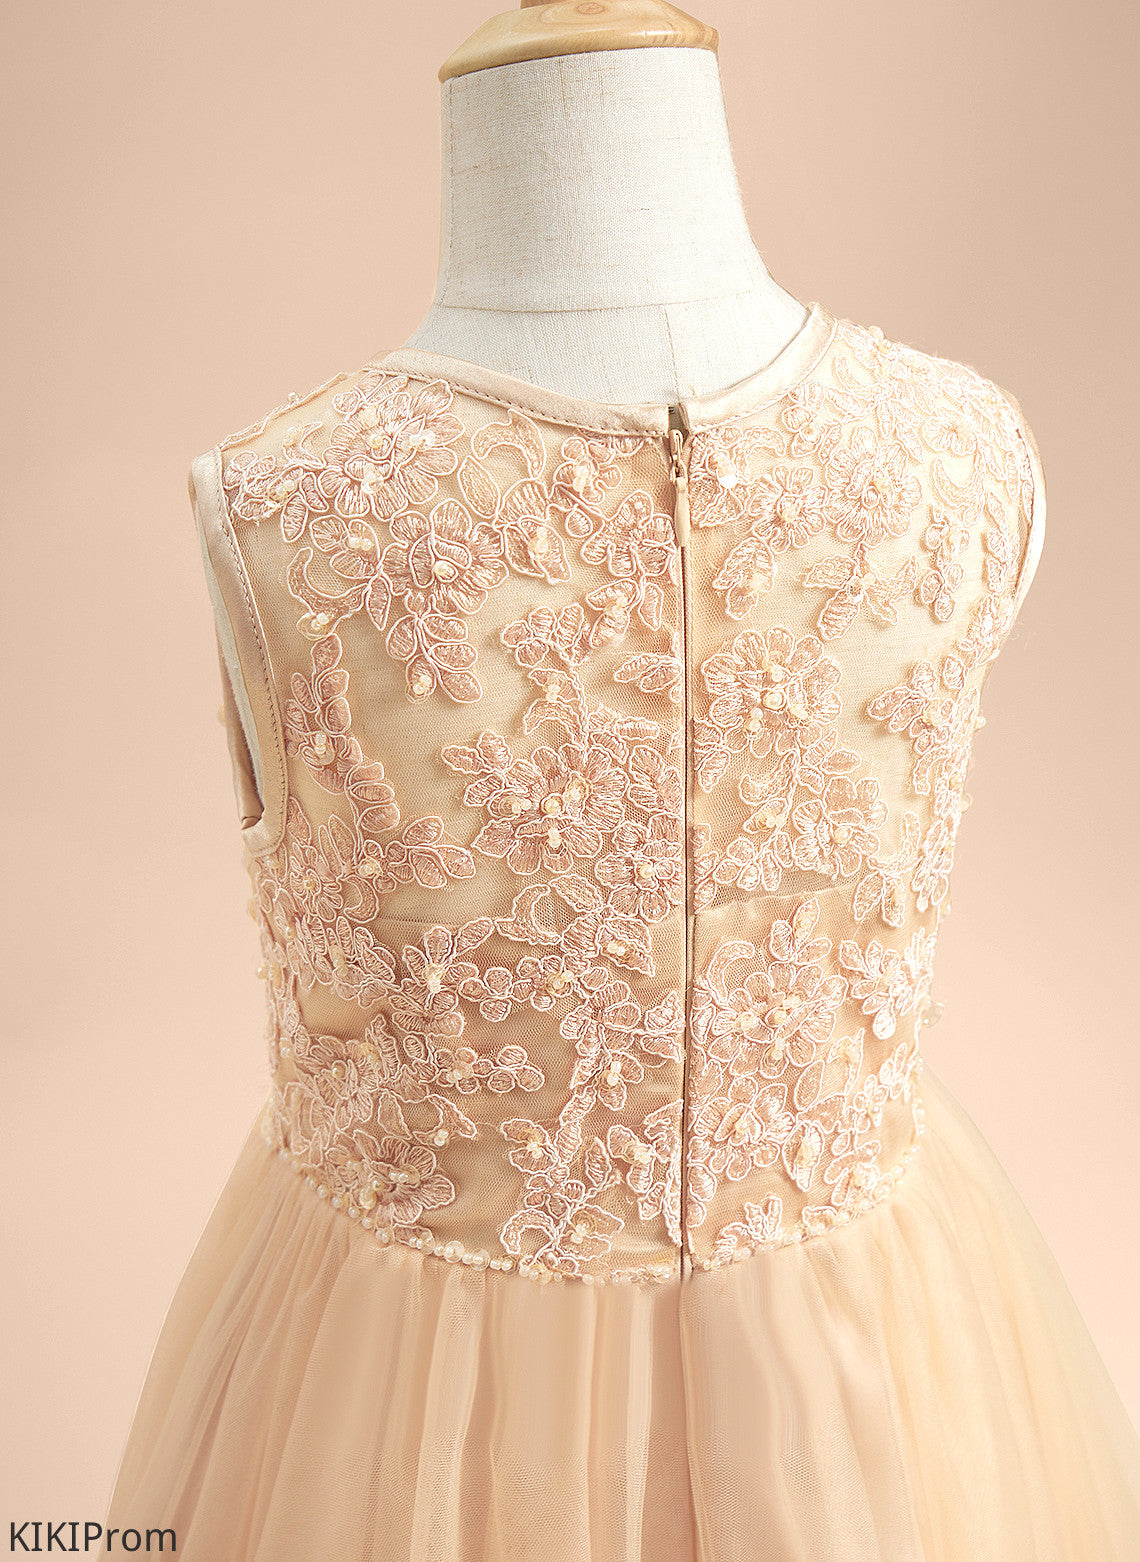 A-Line Scoop - Dress Sleeveless Tea-length Tulle/Lace Beading/Sequins Neck Flower Daisy Girl Flower Girl Dresses With